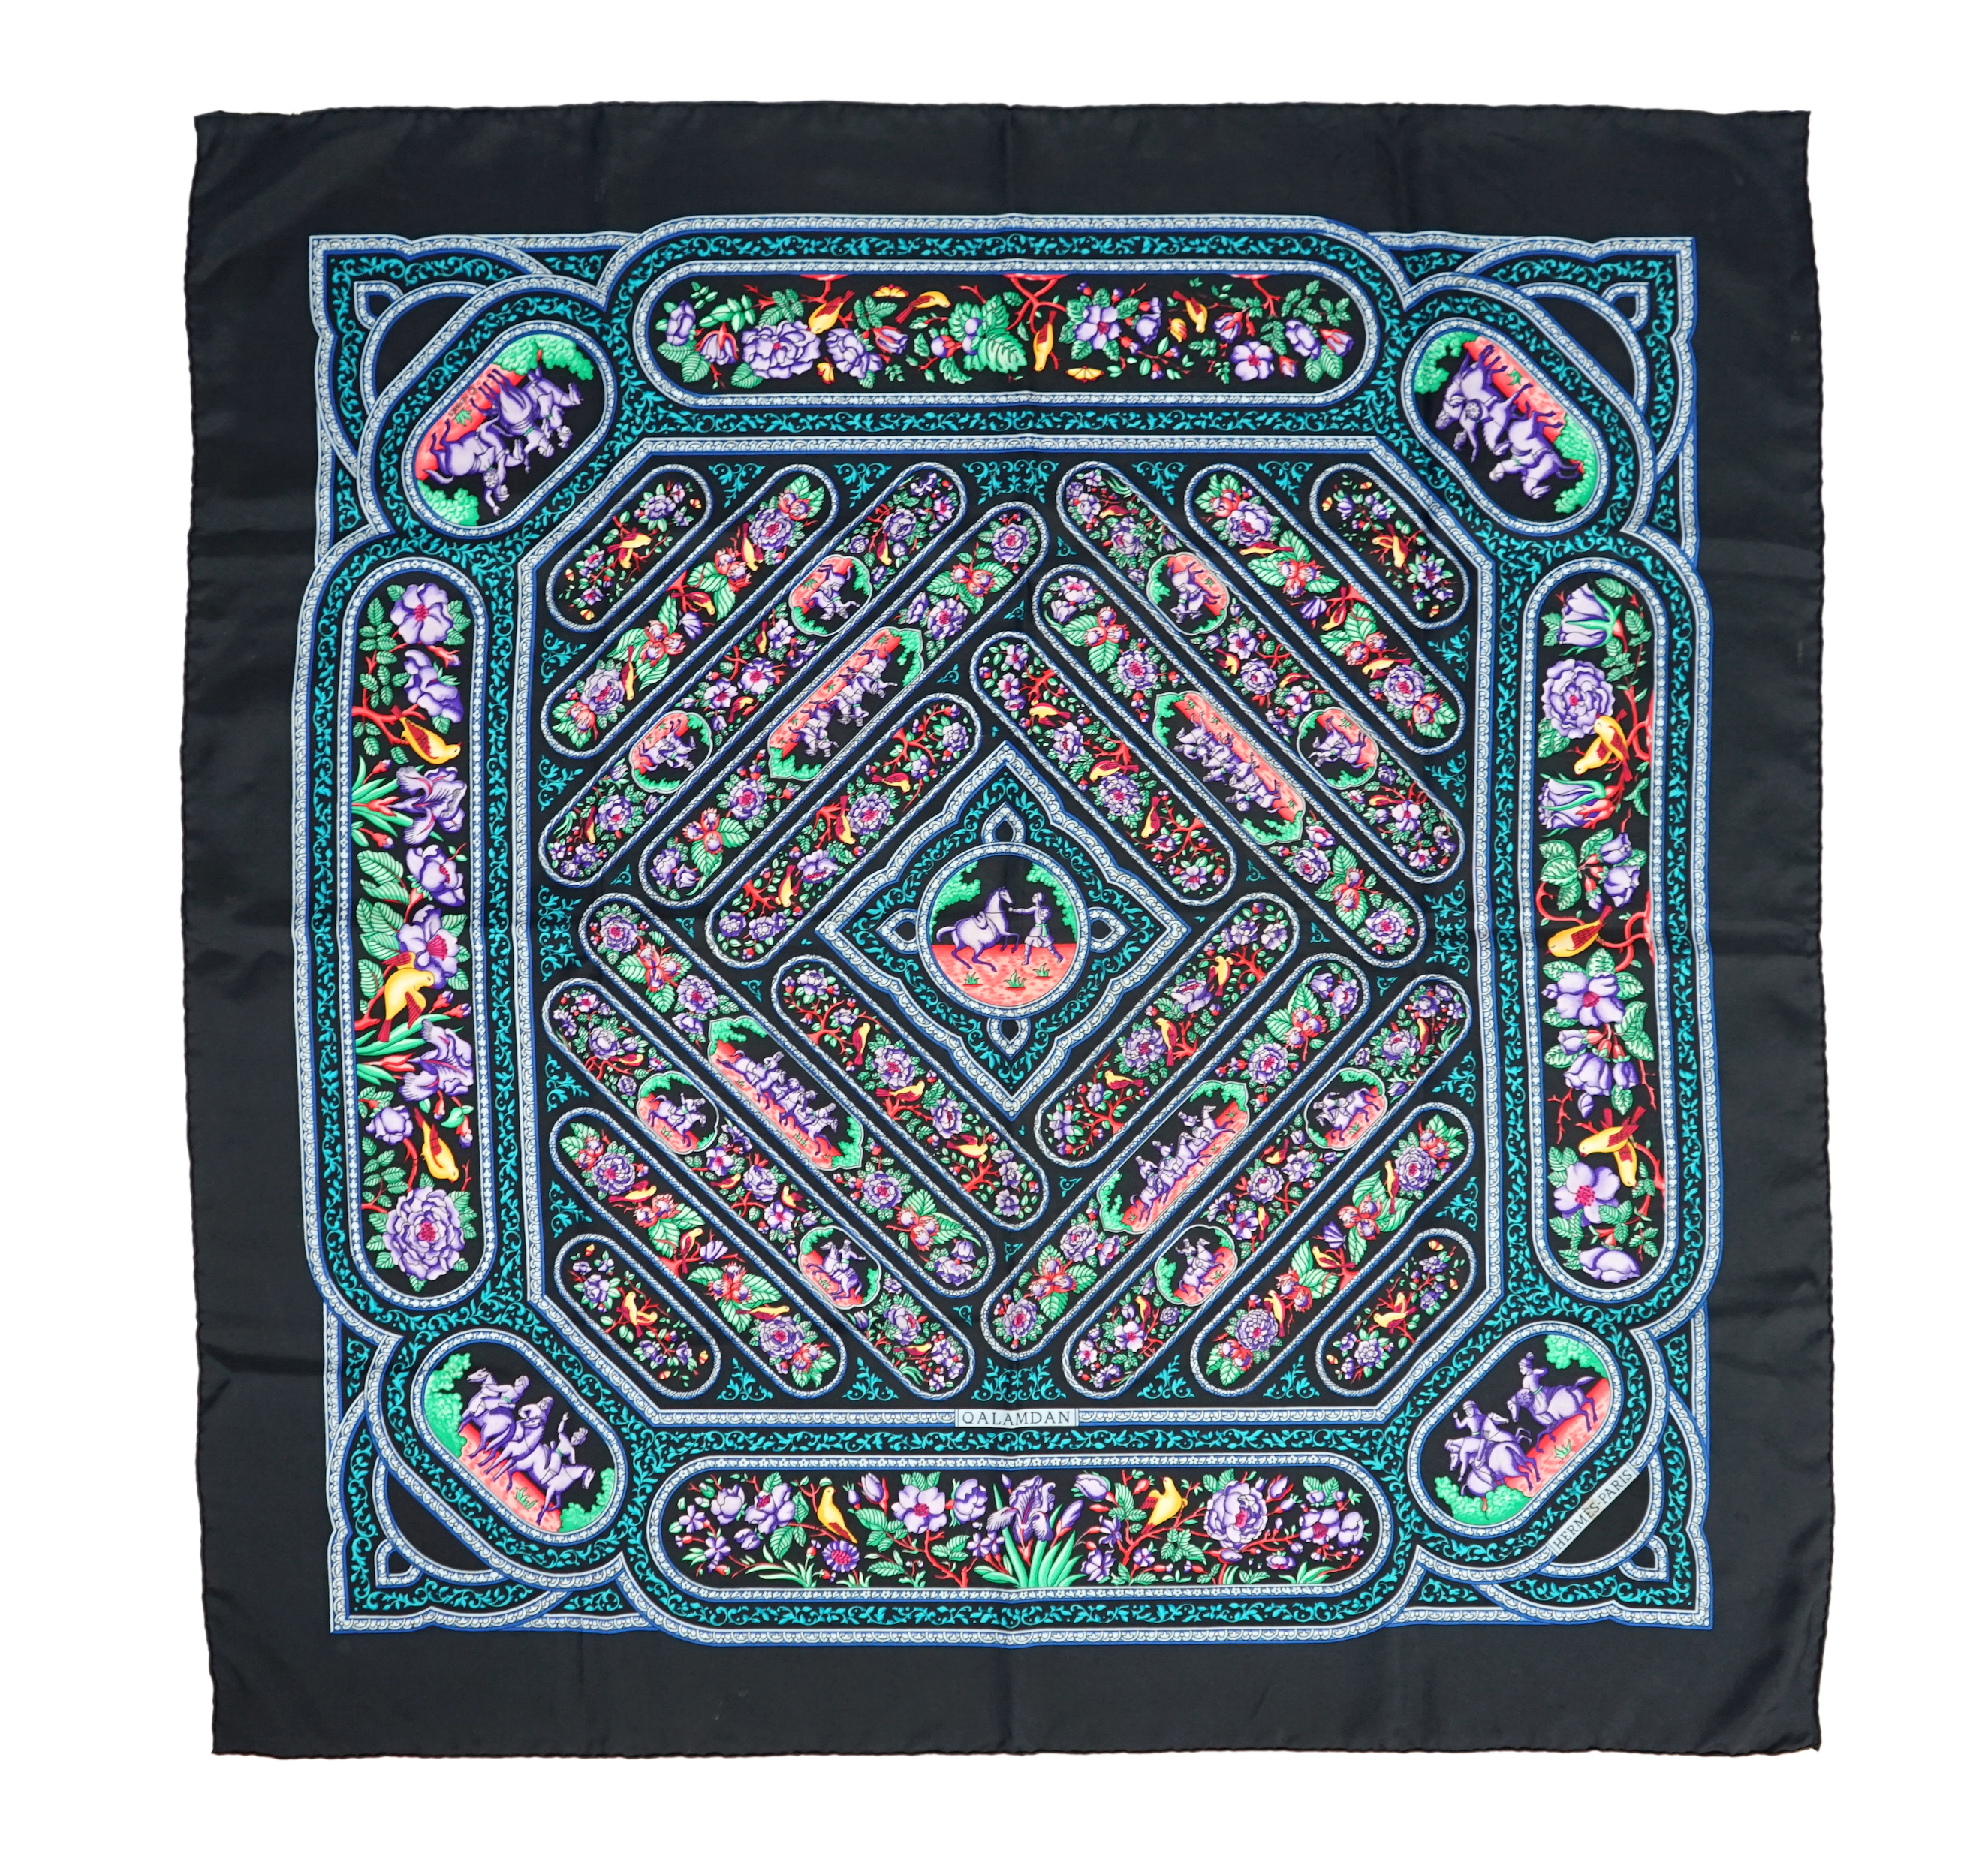 A Hermès silk scarf - Qalamdan by Catherine Baschet, c.1990, with bag and box, 90cm x 90cm***